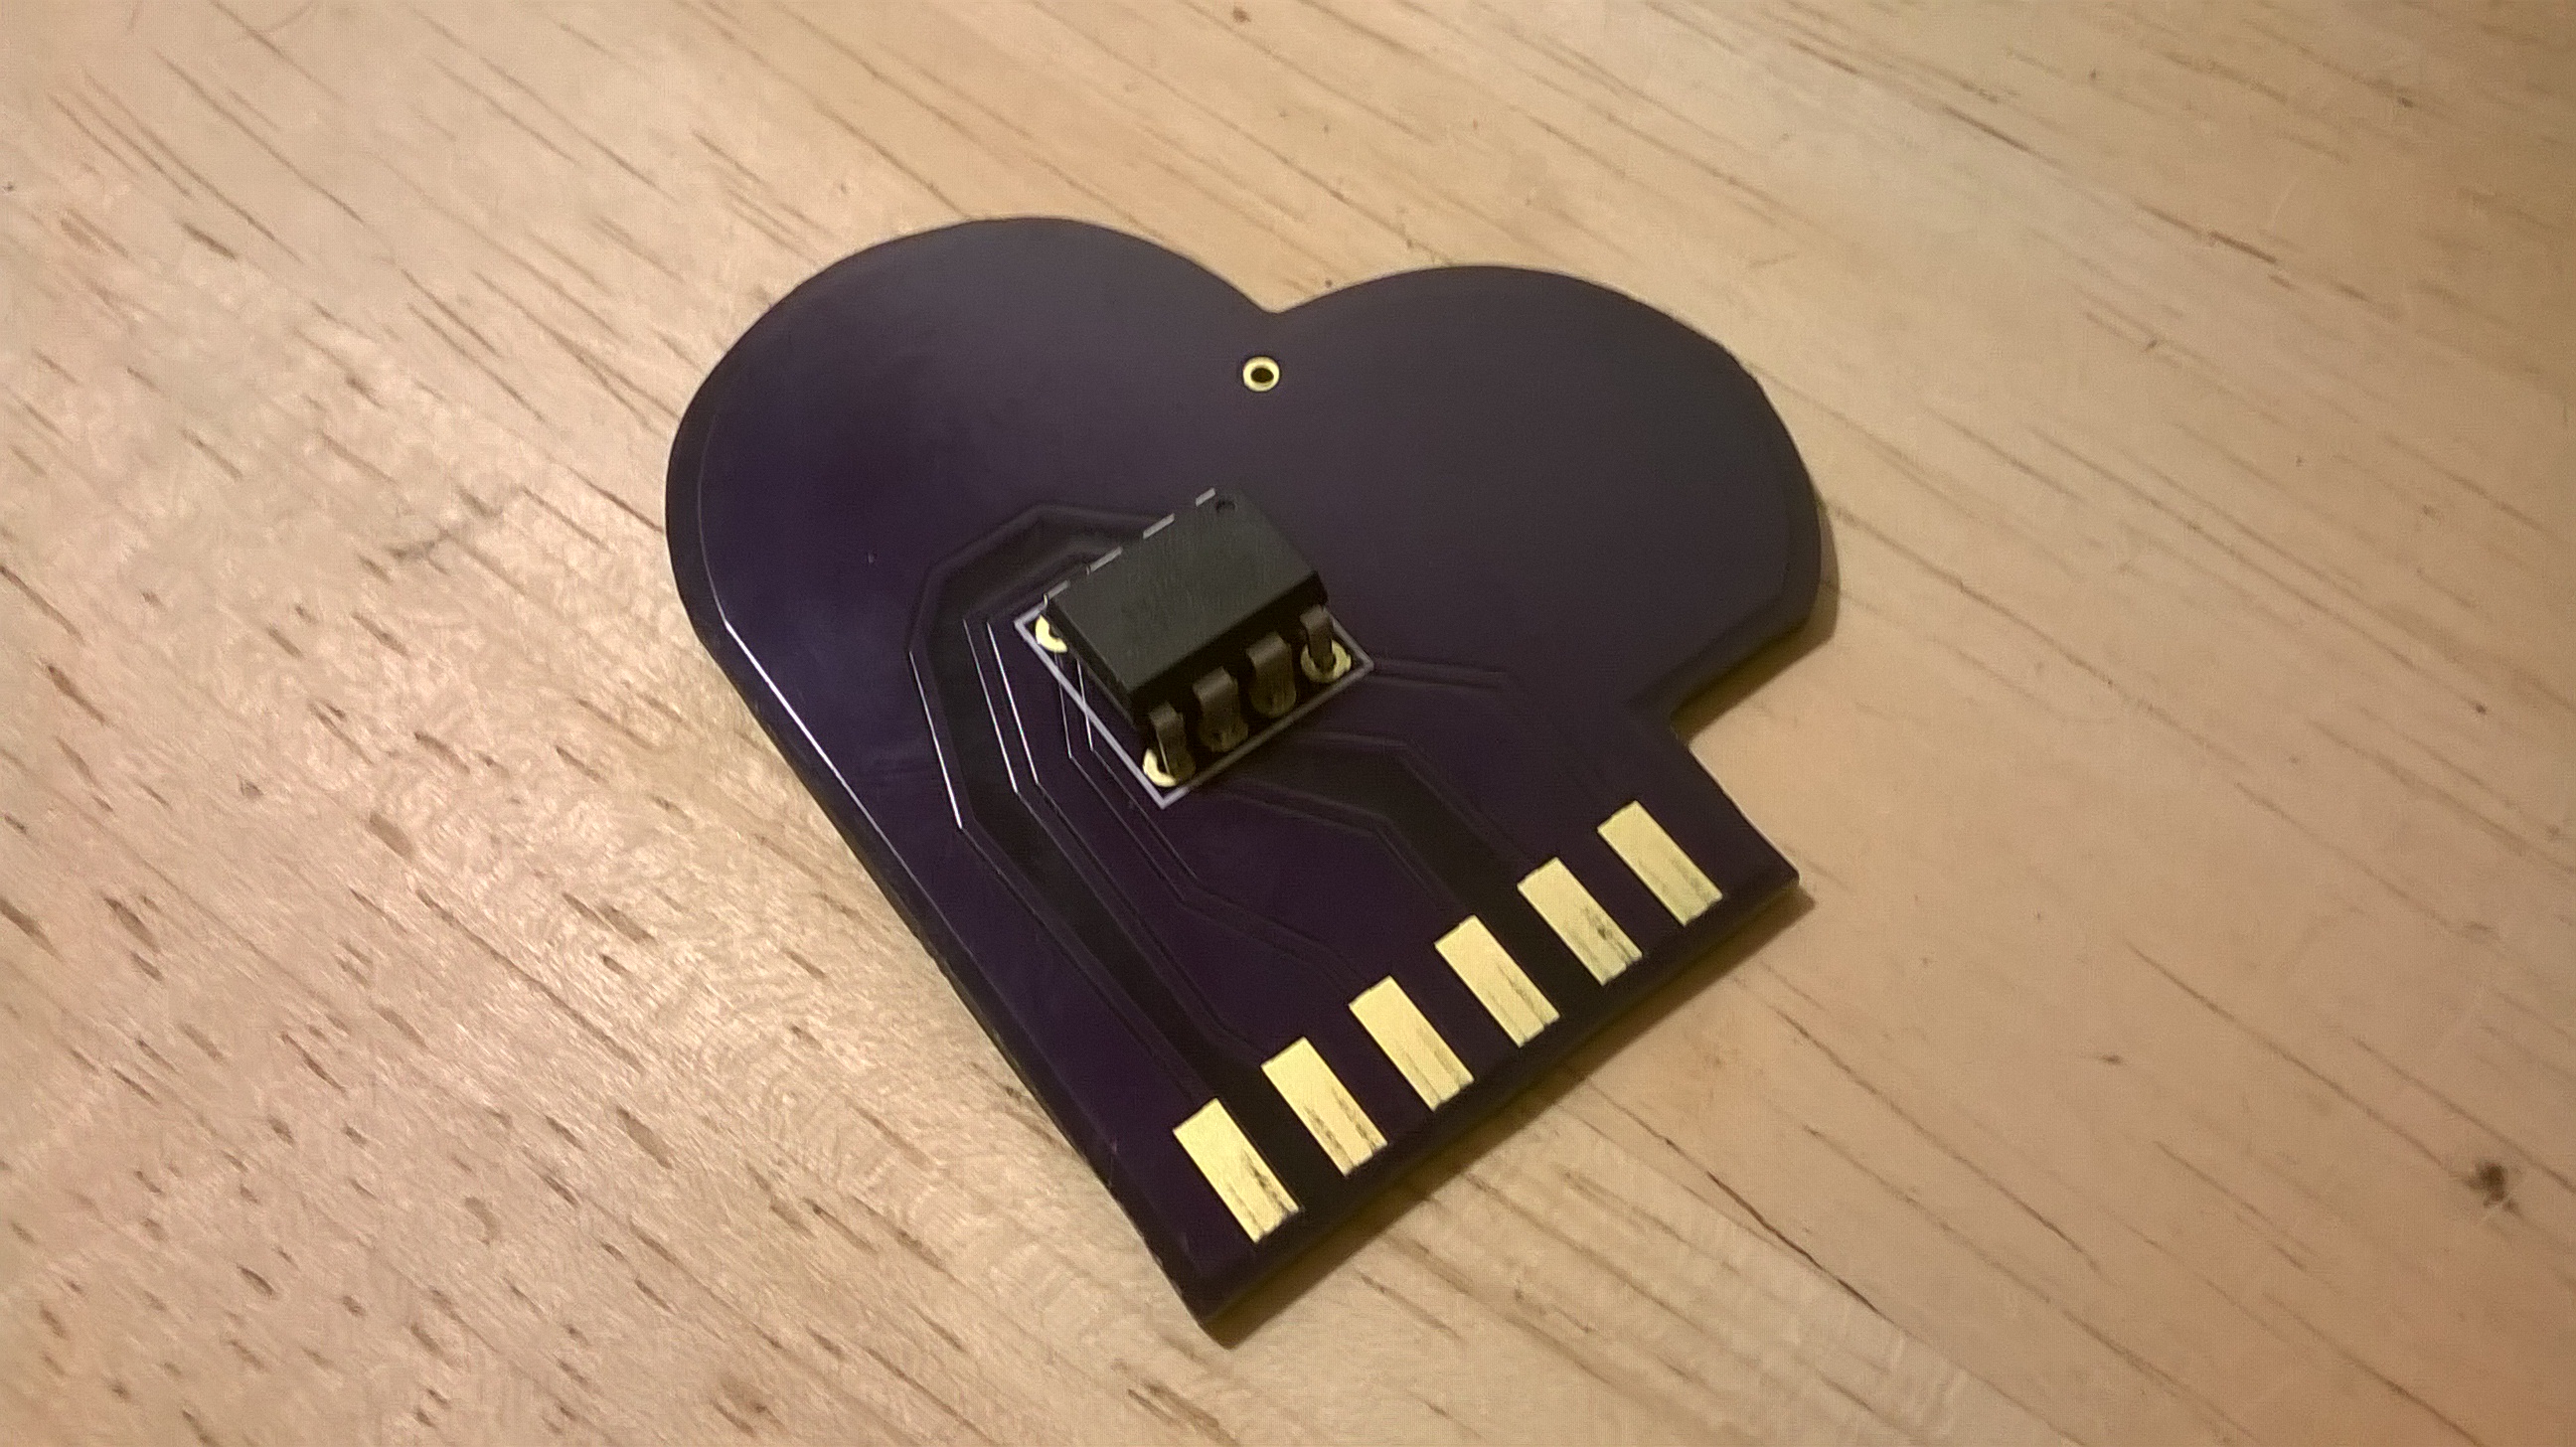 Custom designed circuit board pcb cartridge, in the shape of a heart